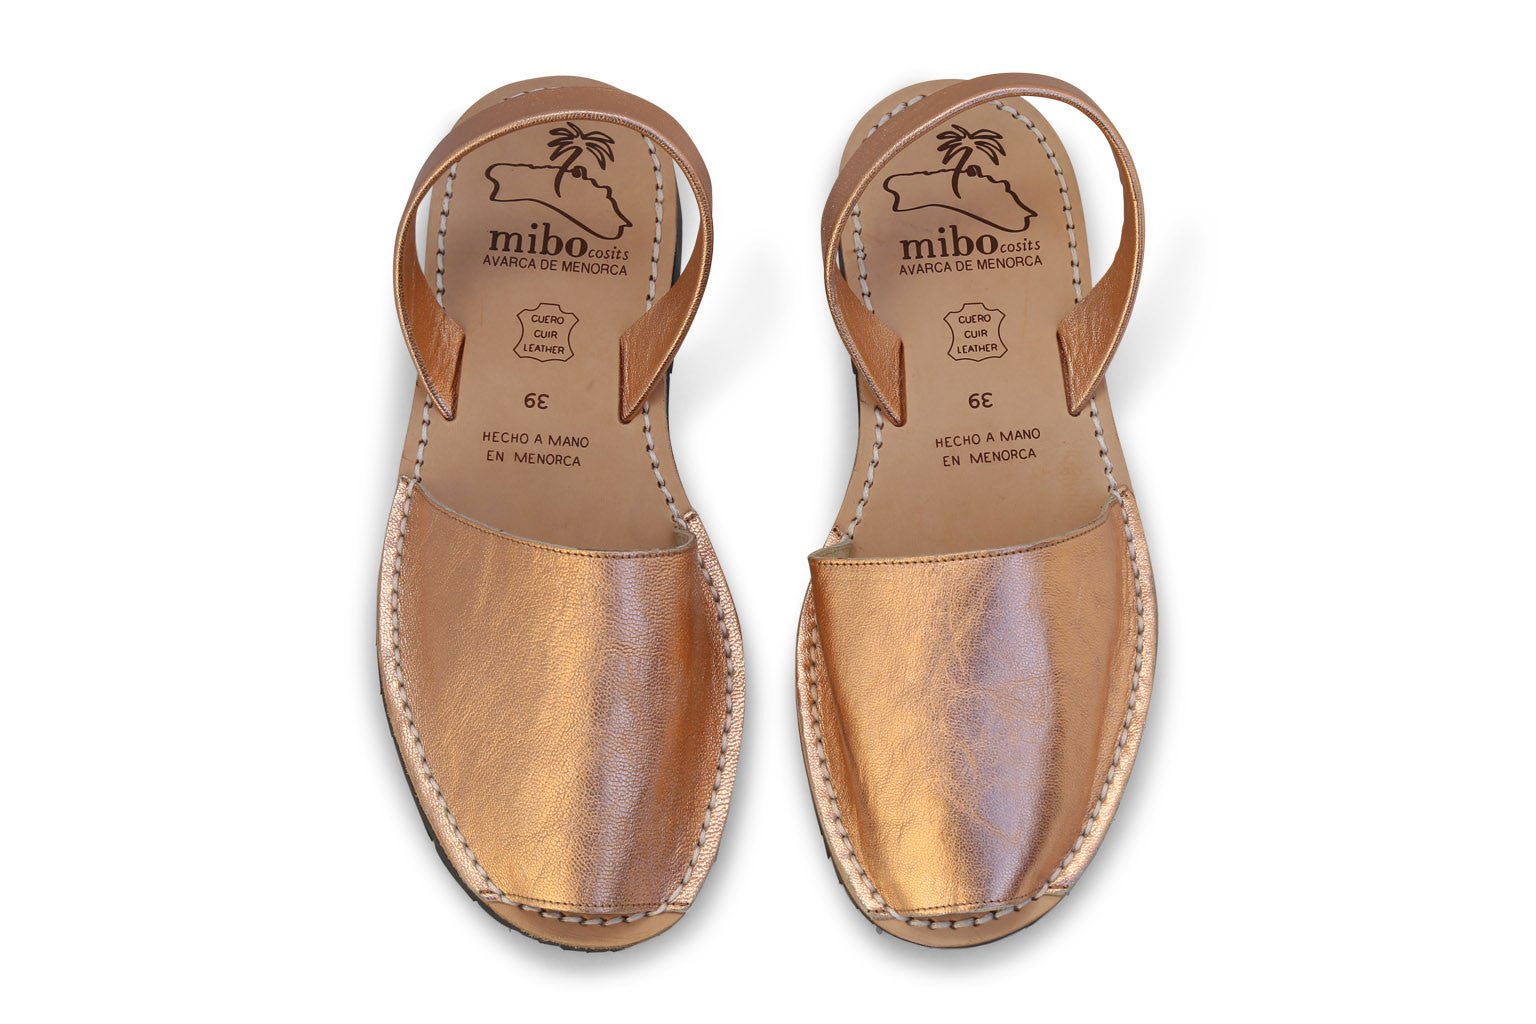 Mibo Avarcas Metallic Rose Gold Menorcan Sandals - THE AVARCA STORE